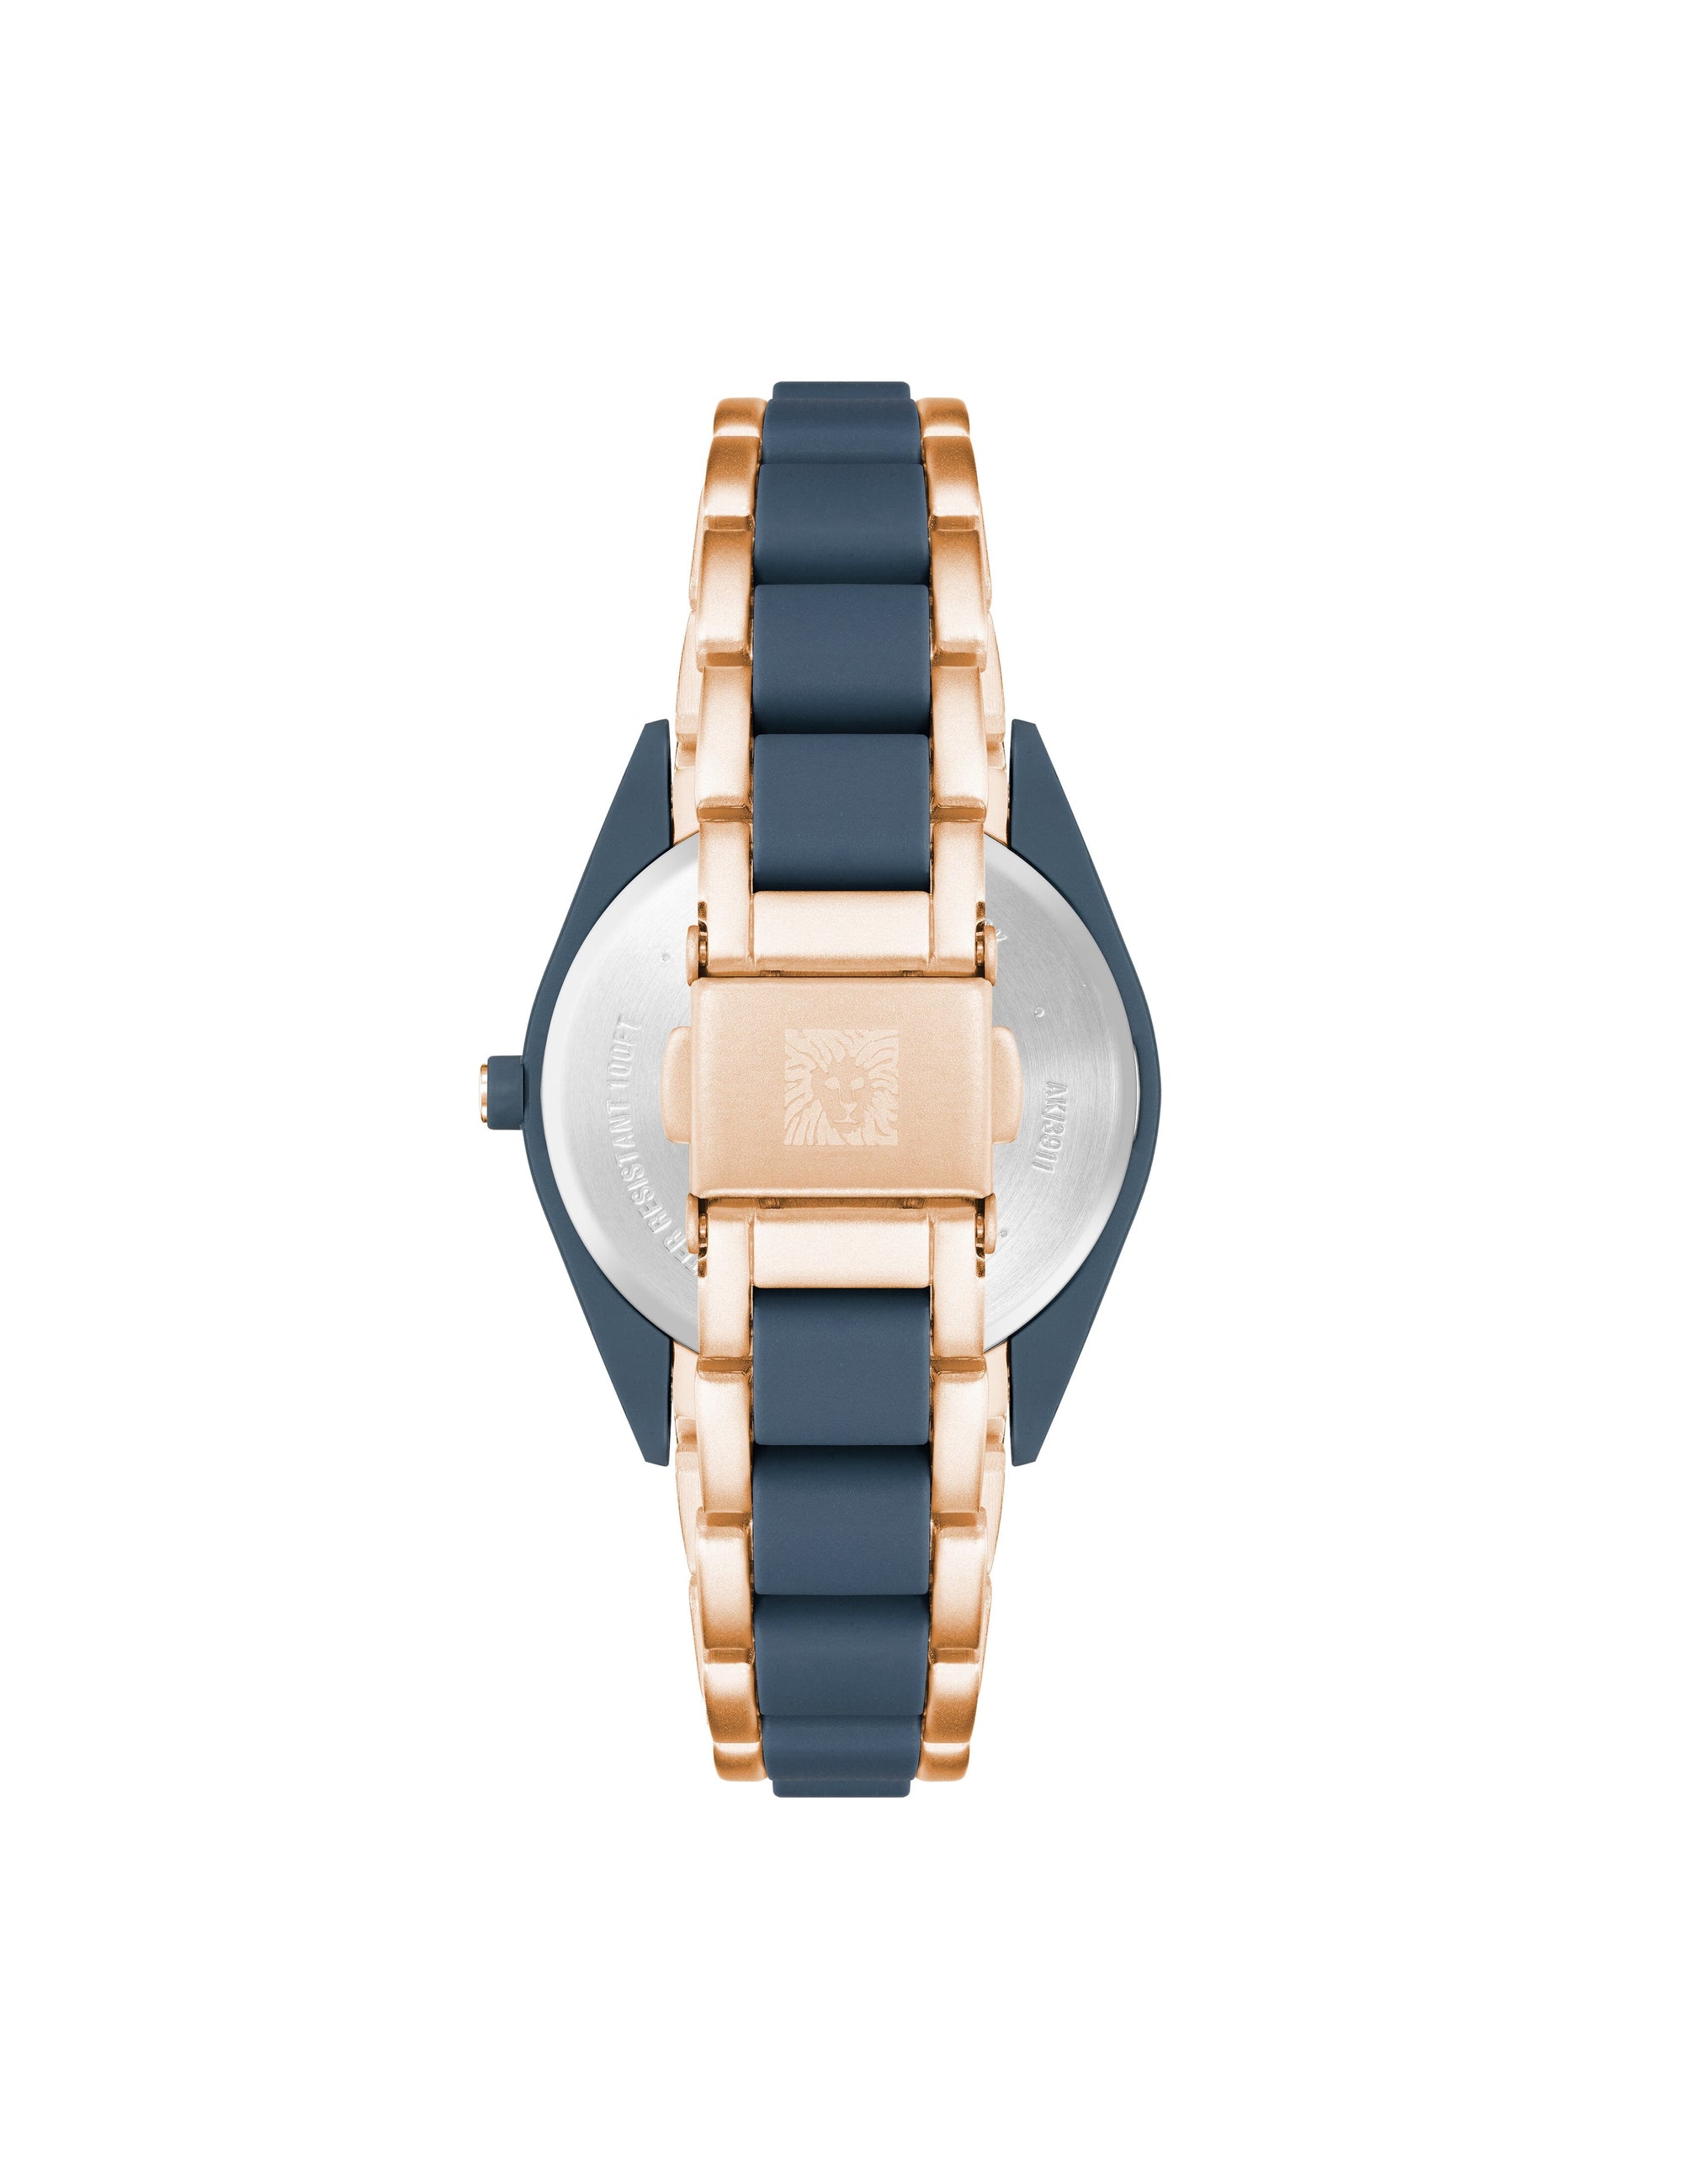 HUGO BOSS Watches – Elaborate designs | Women